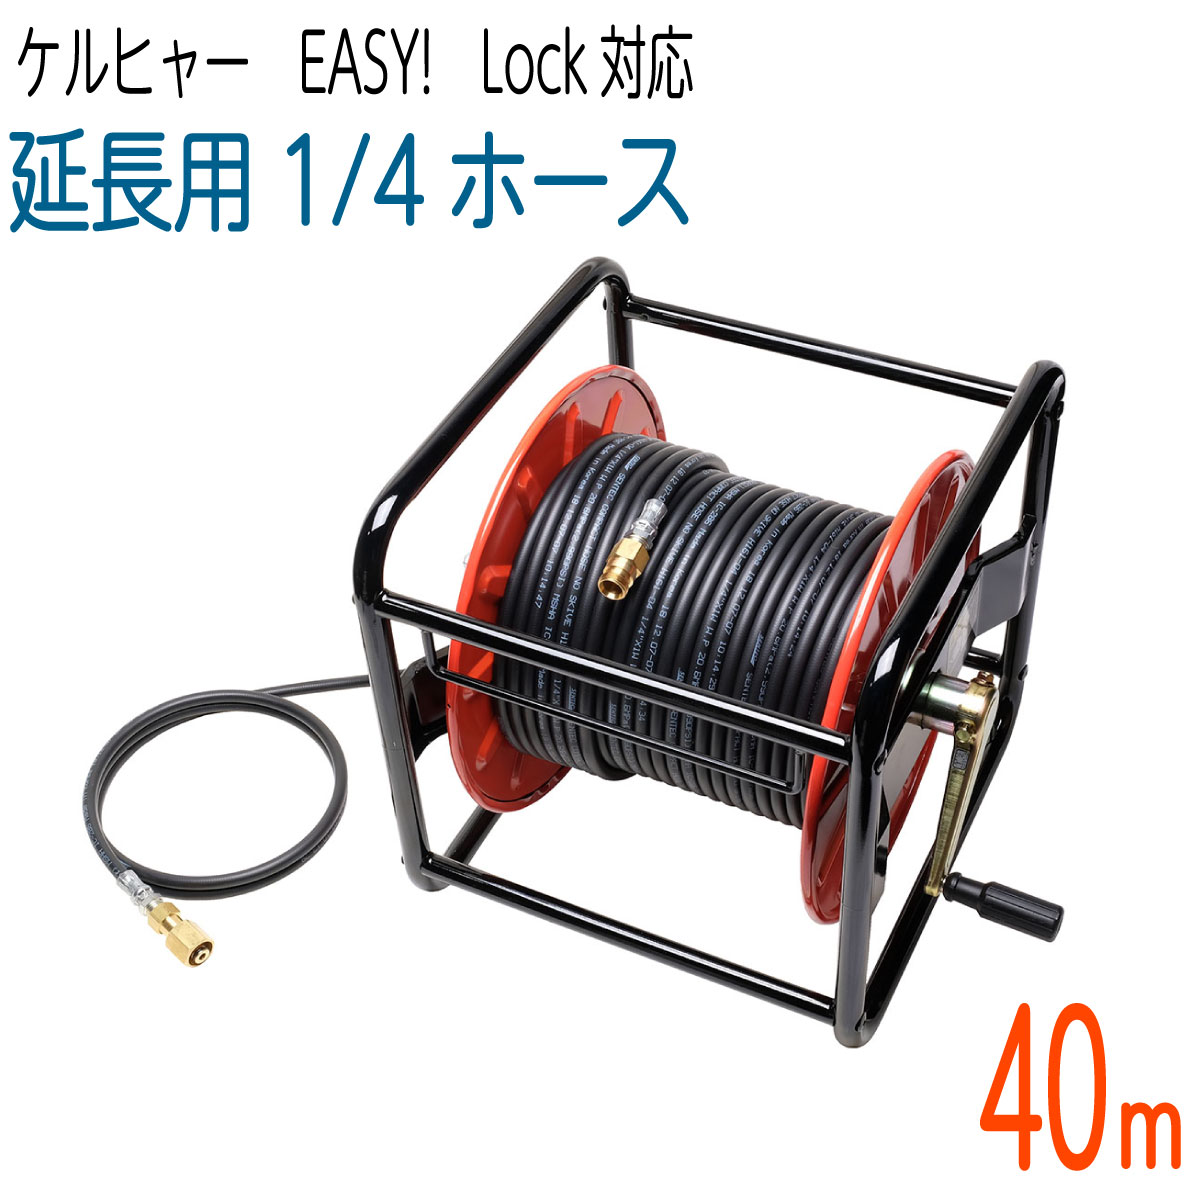 【40Mリール巻き】1/4サイズ 新型Easy!Lock対応 ケルヒャーHD用 延長高圧洗浄機ホース コンパクトホース